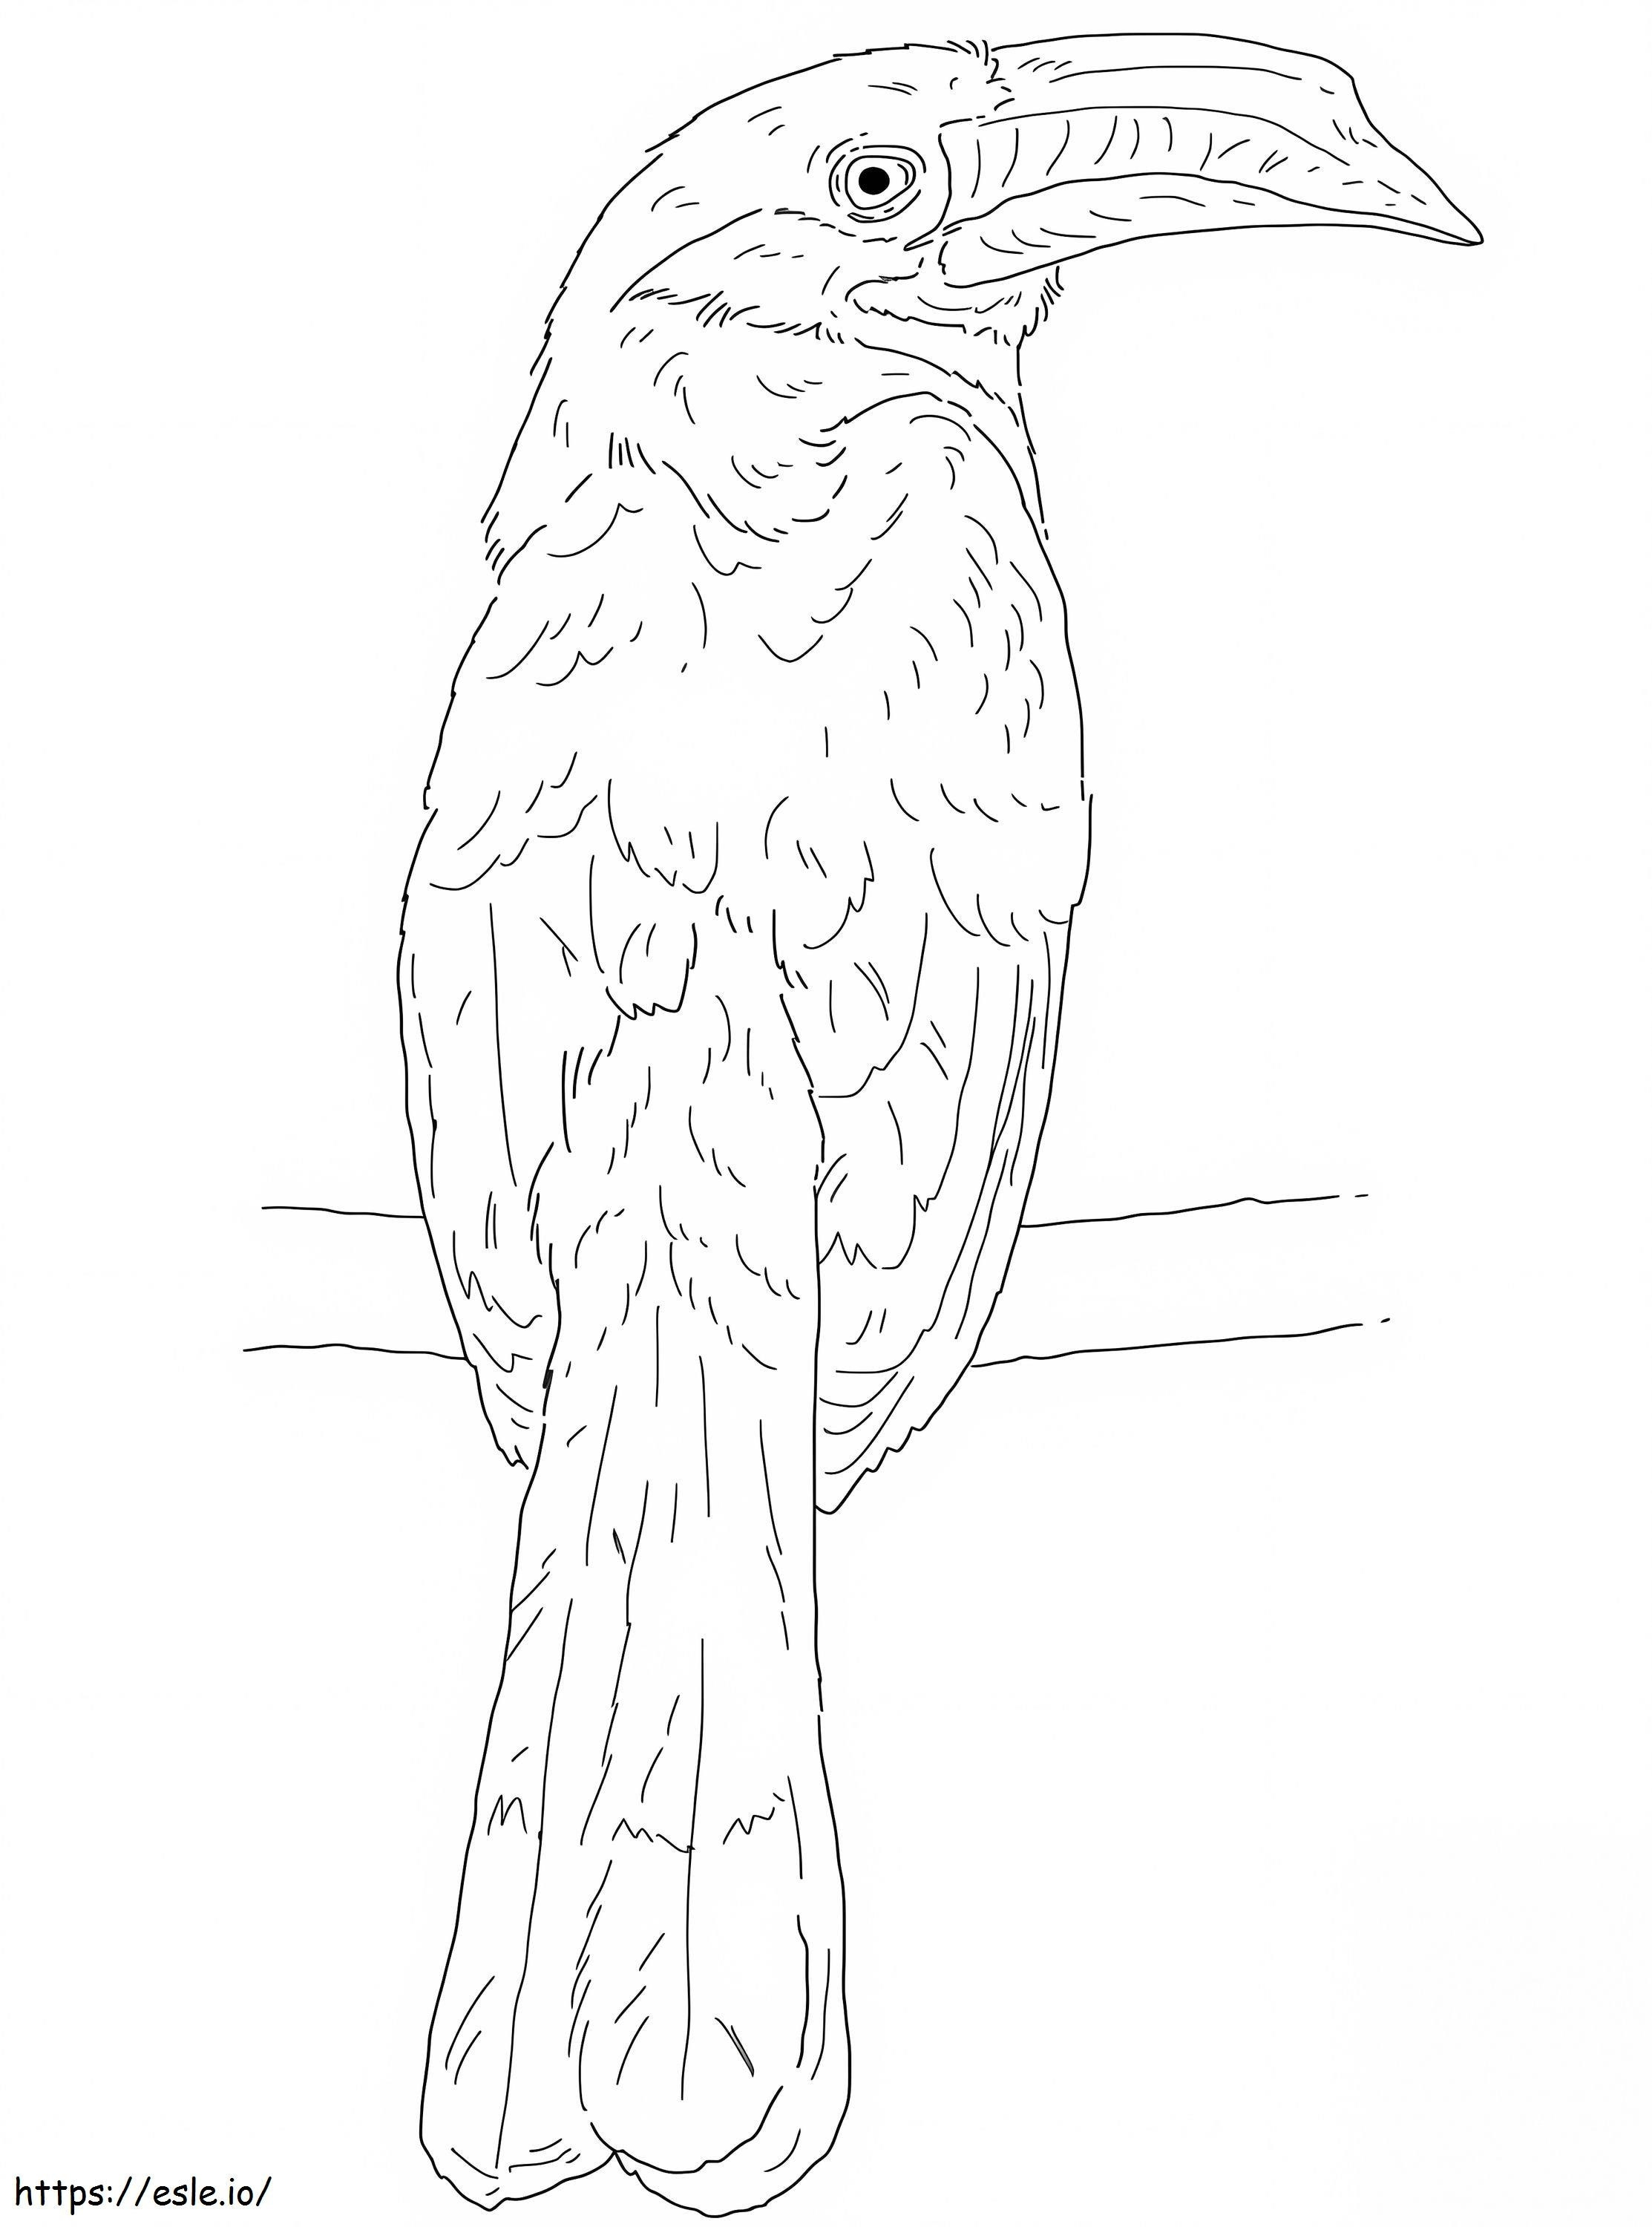 Visayan Hornbill coloring page